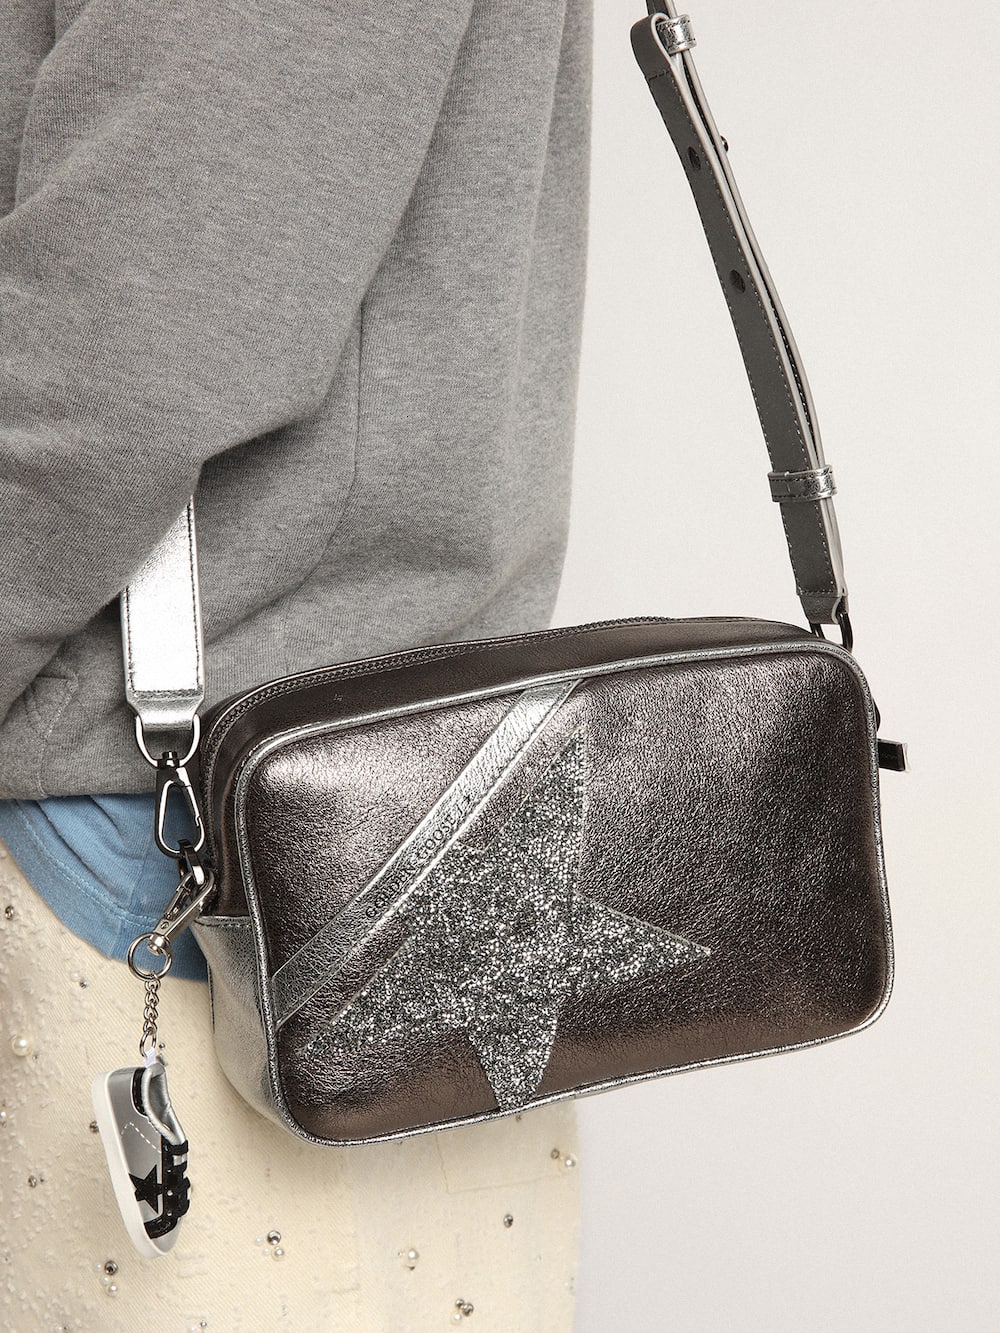 Golden Goose - Star Bag in pelle argento con stella in cristalli Swarovski in 